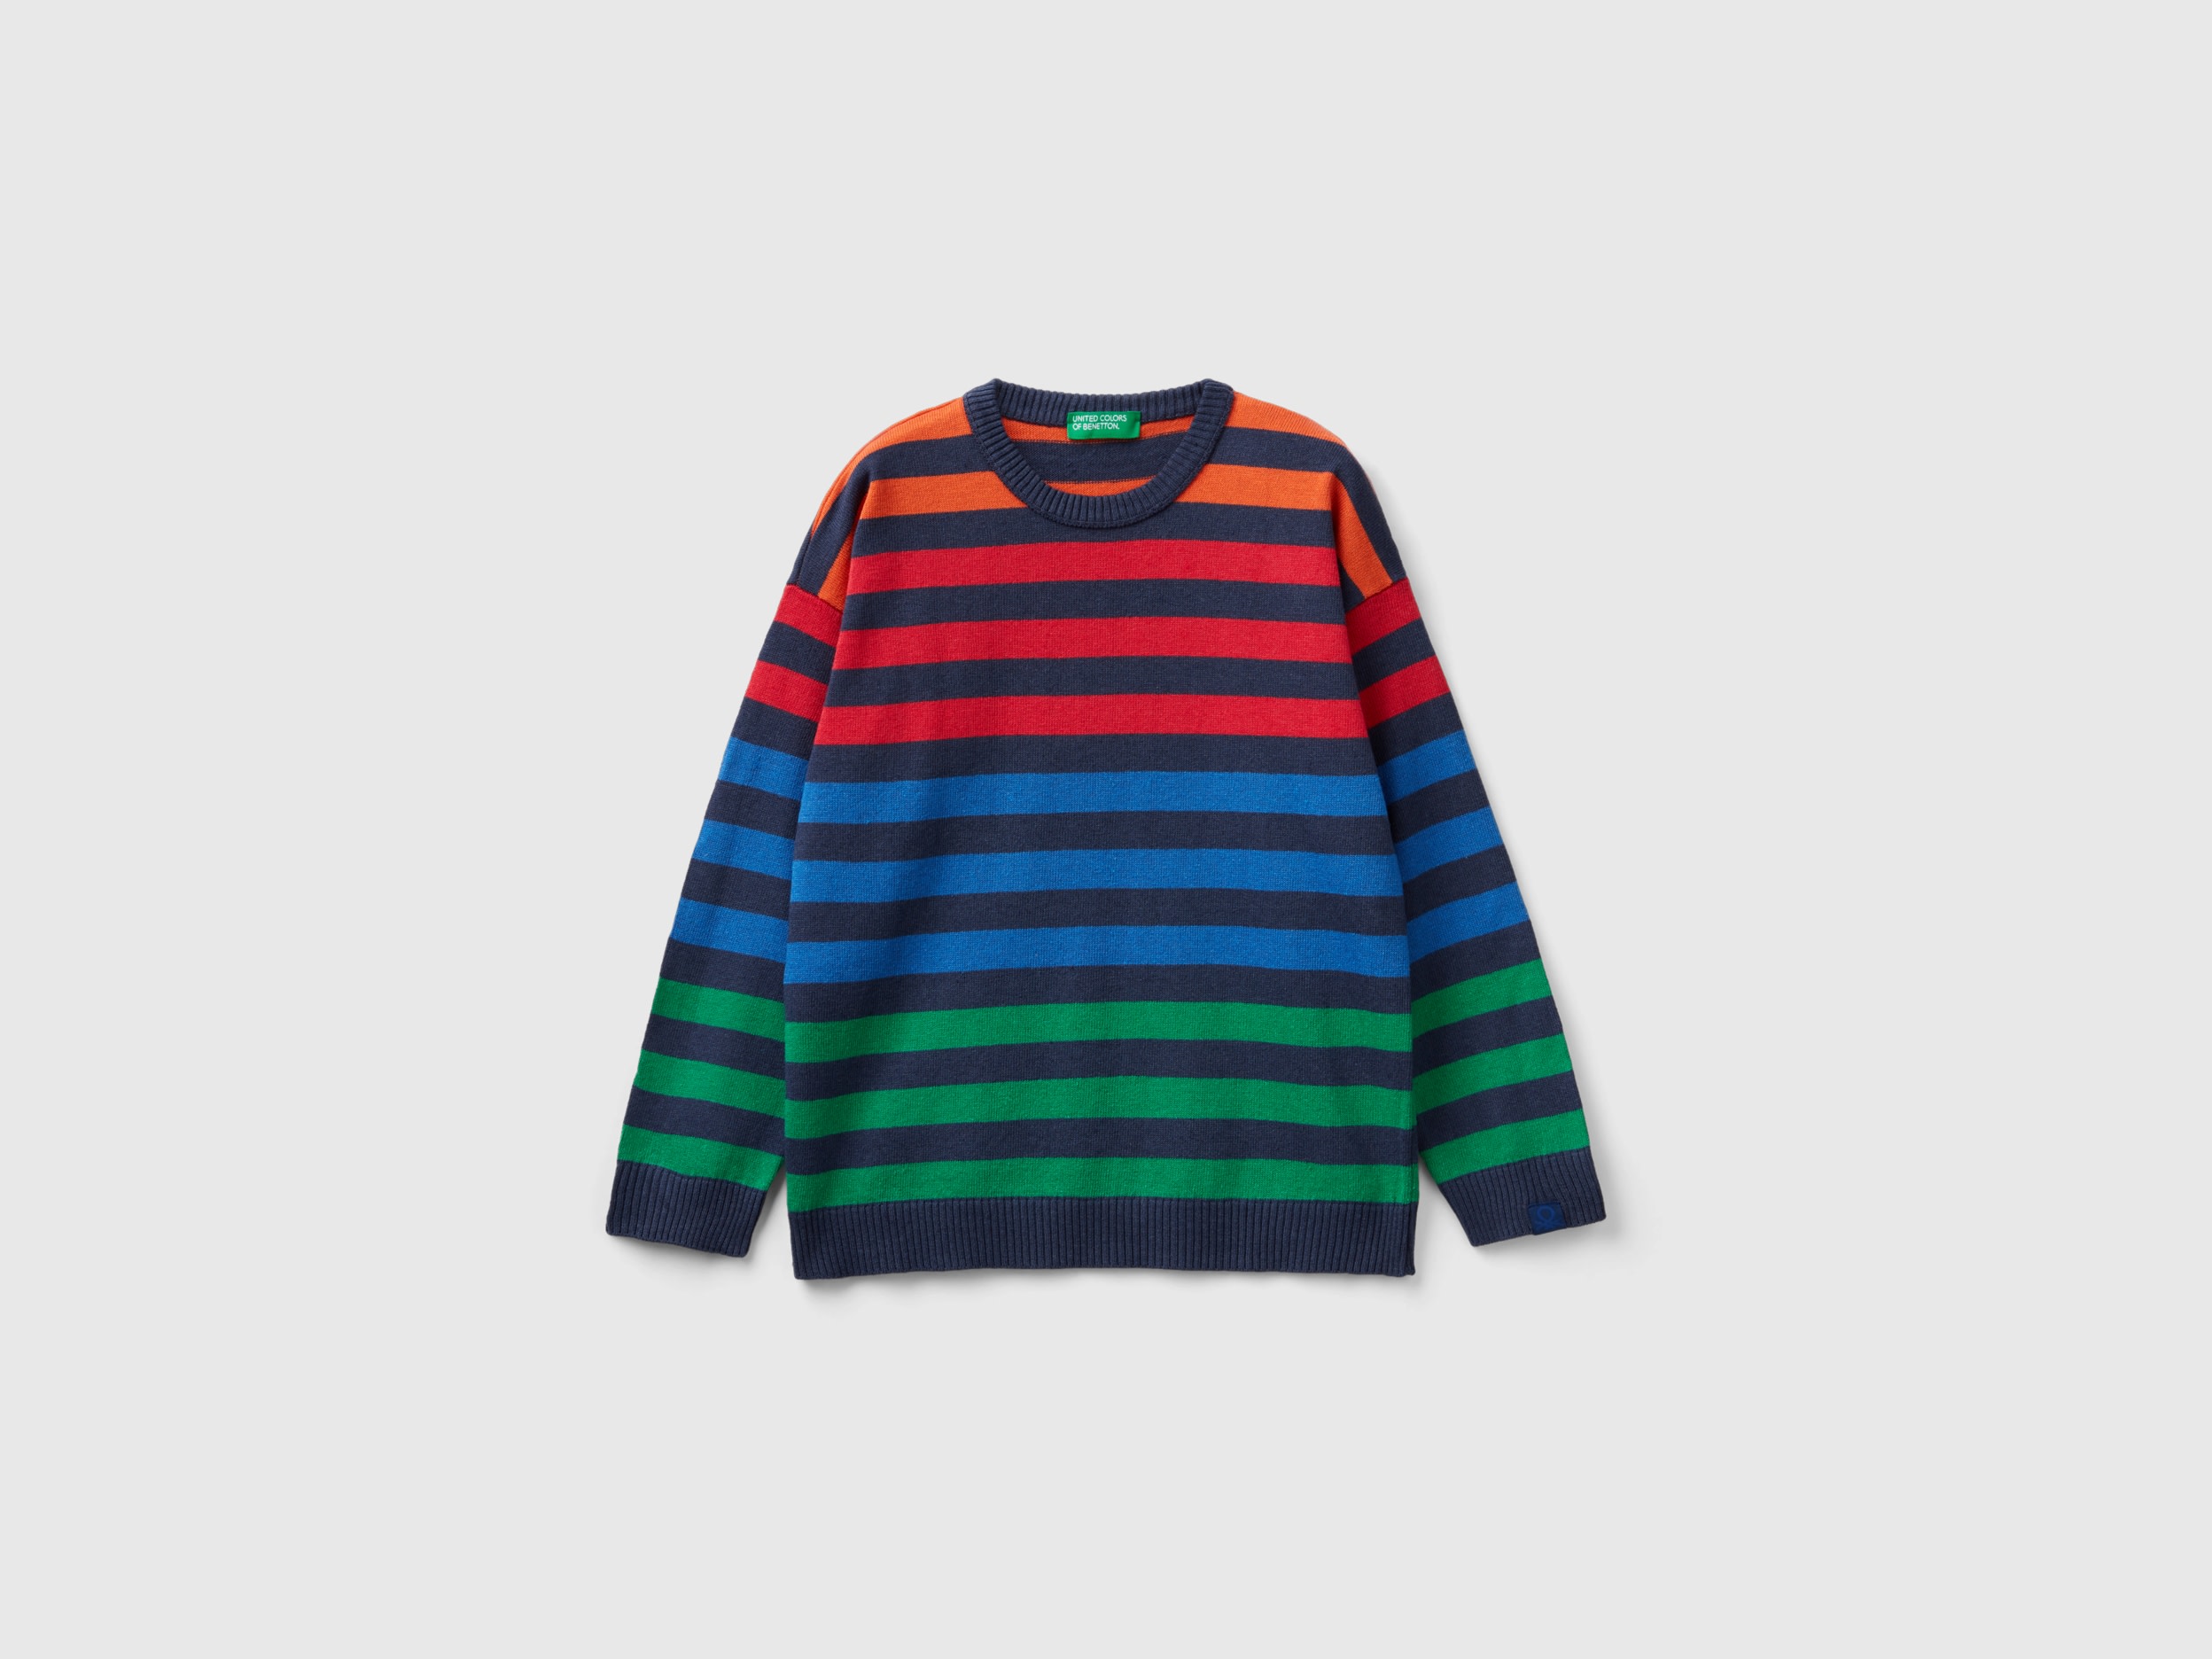 Image of Benetton, Striped Sweater, size L, Multi-color, Kids